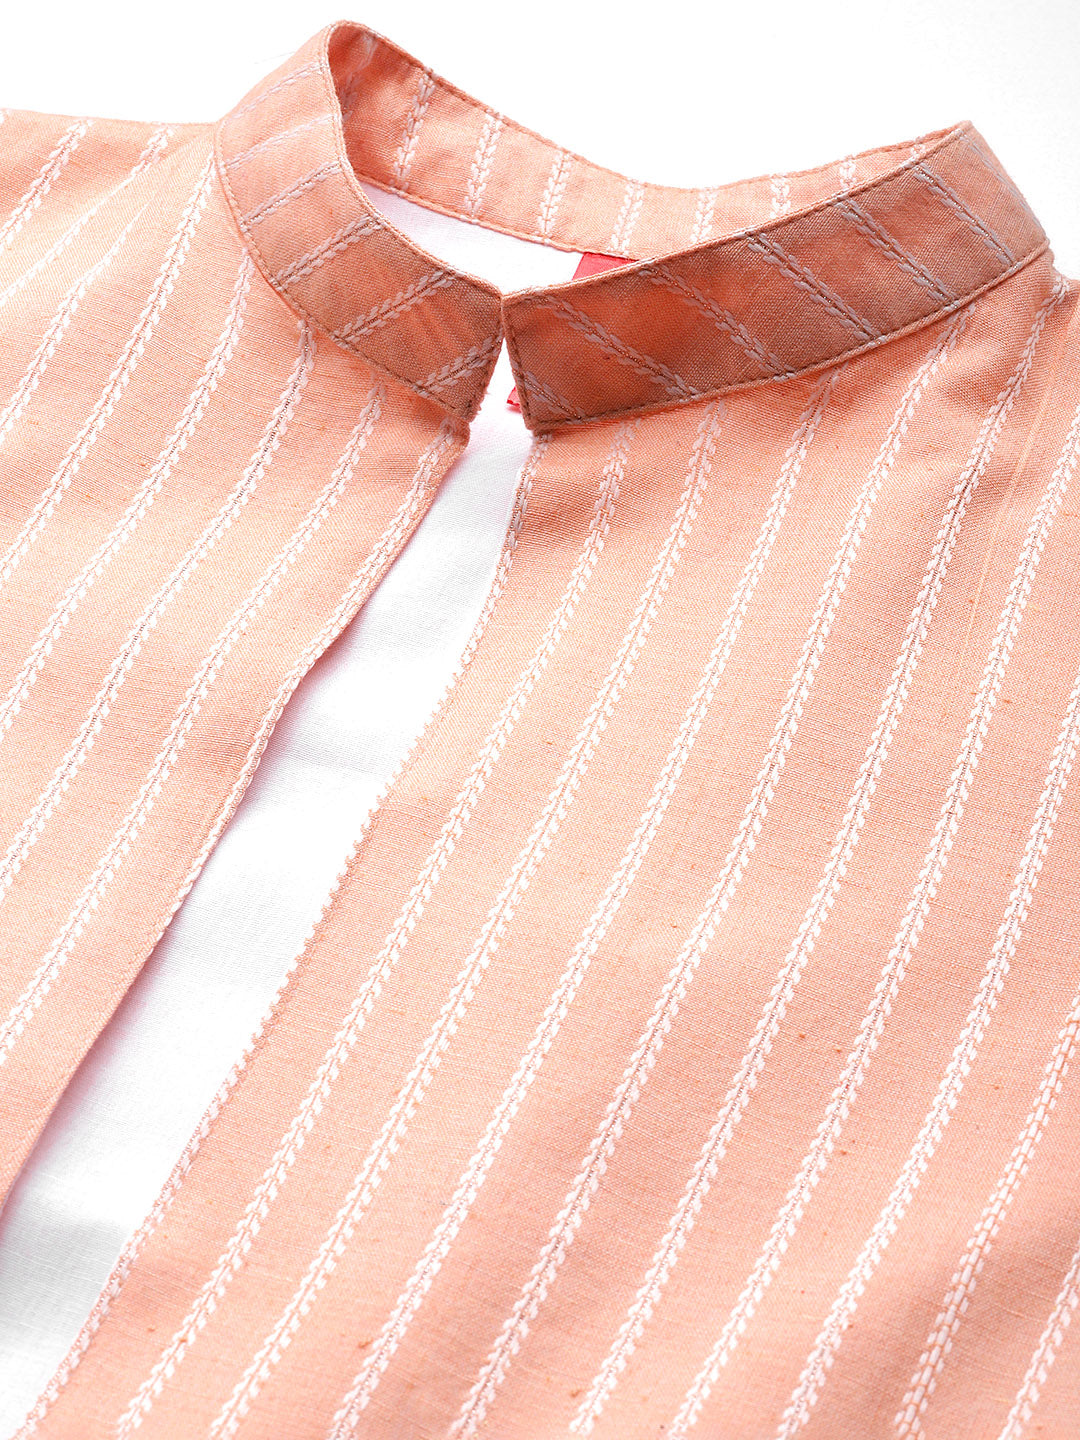 Cottinfab Striped Two-Piece Formal Suit